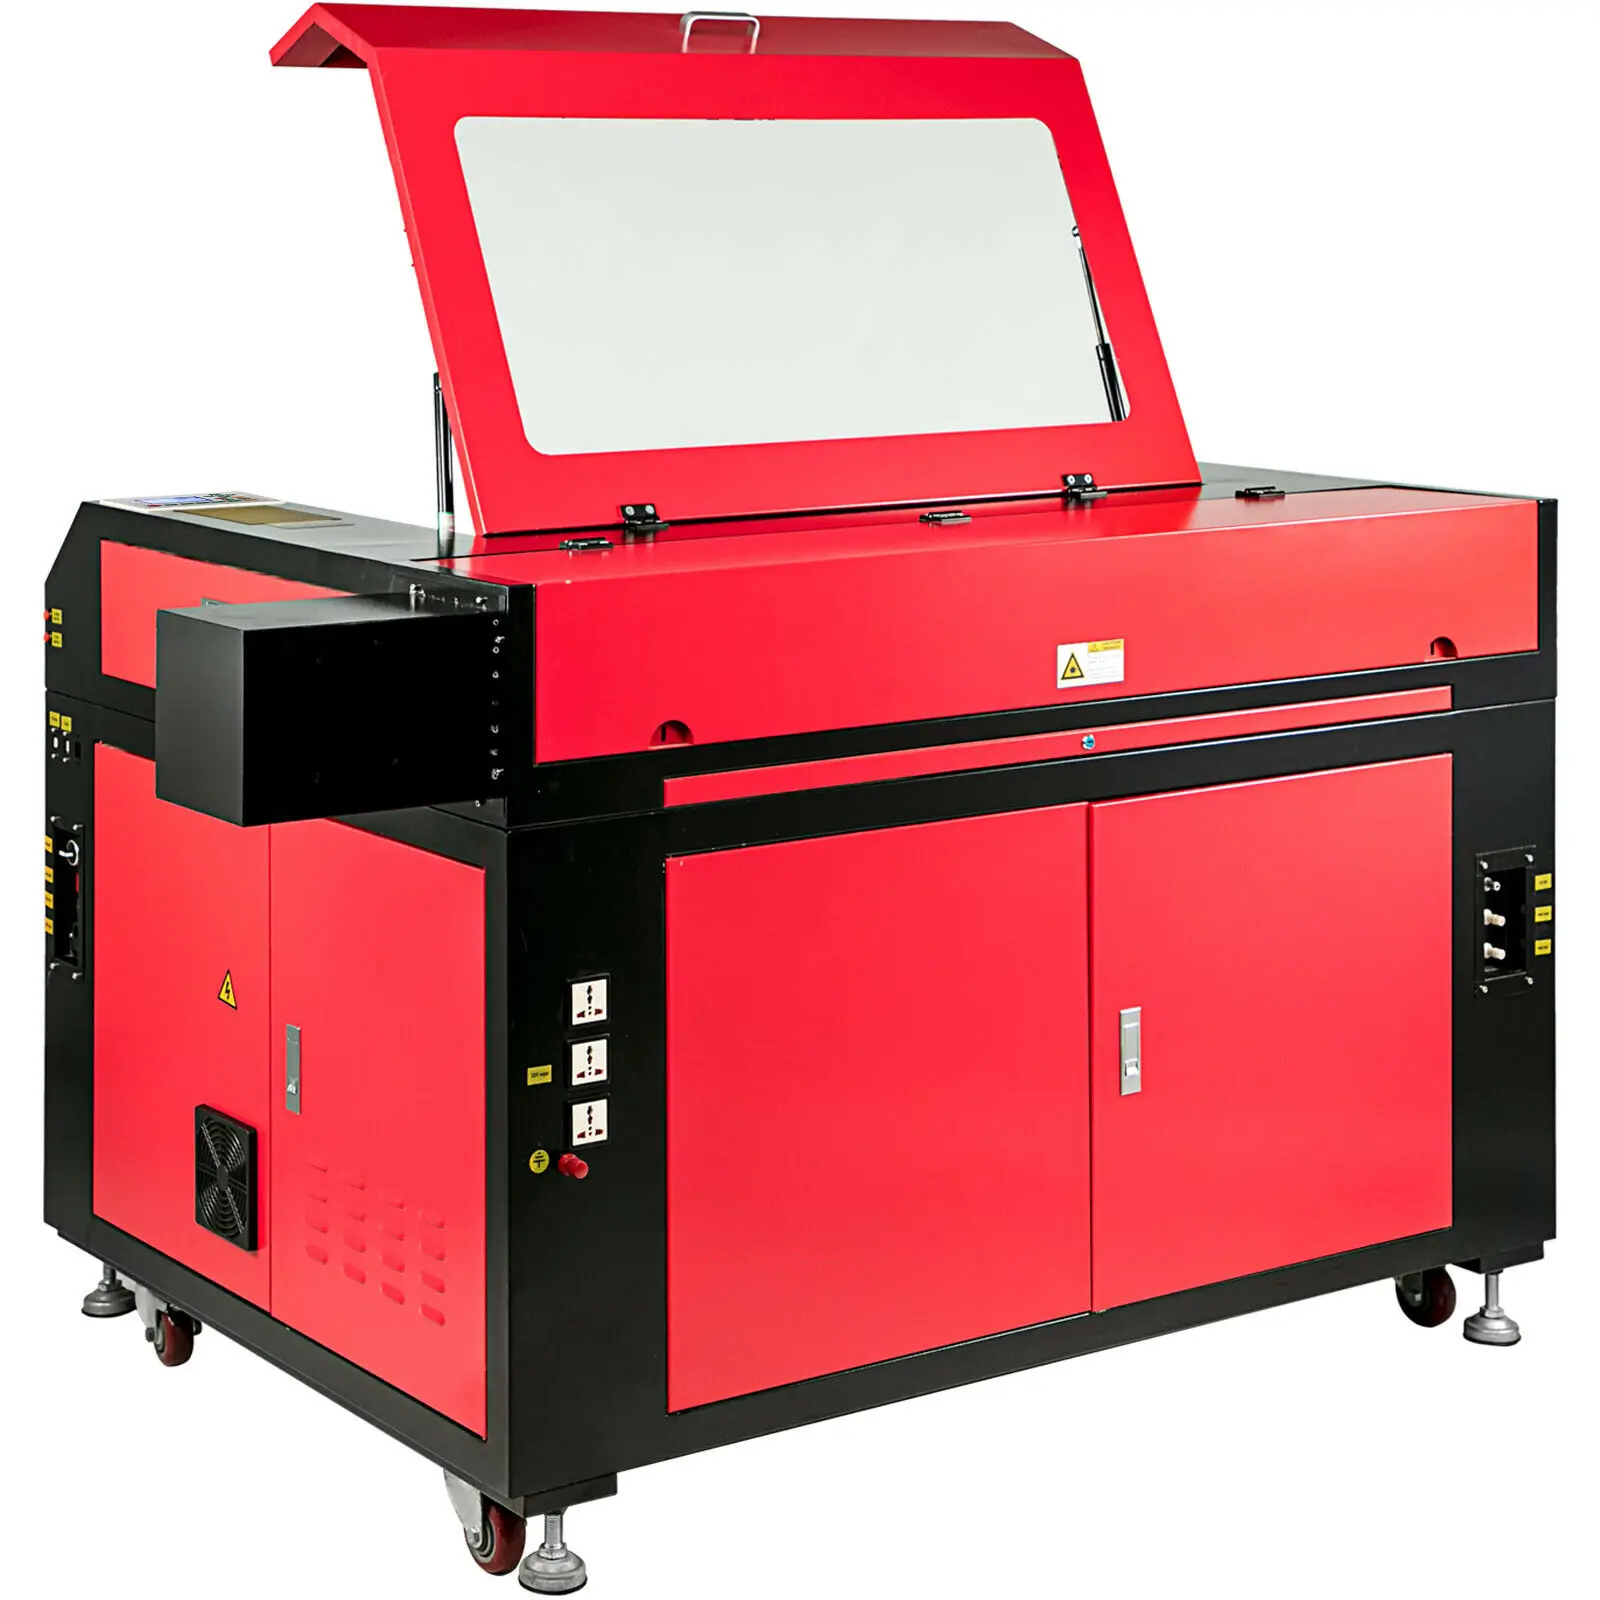 

VEVOR Ruida 100W CO2 Laser Engraving Machine 900x600mm KH9060 Laser Engraver Cutting Tool For Wood Acrylic Ruida Controller EFR